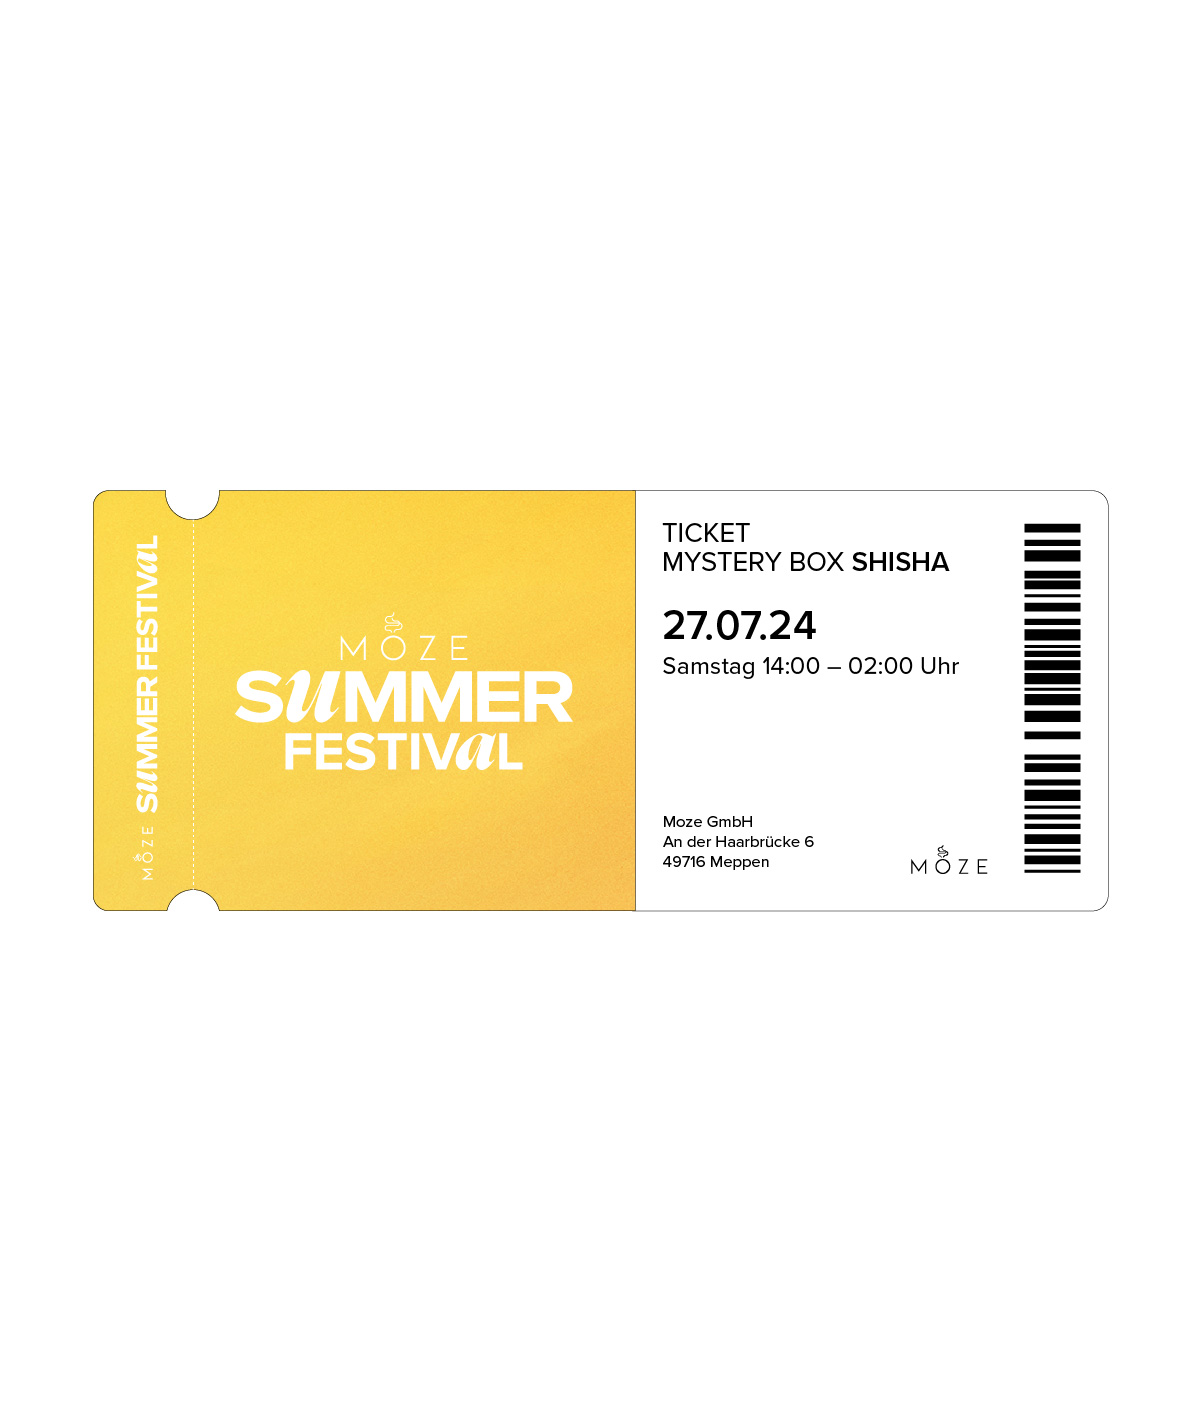 Moze Summer Festival - Ticket (inkl. Mystery Box Shisha)